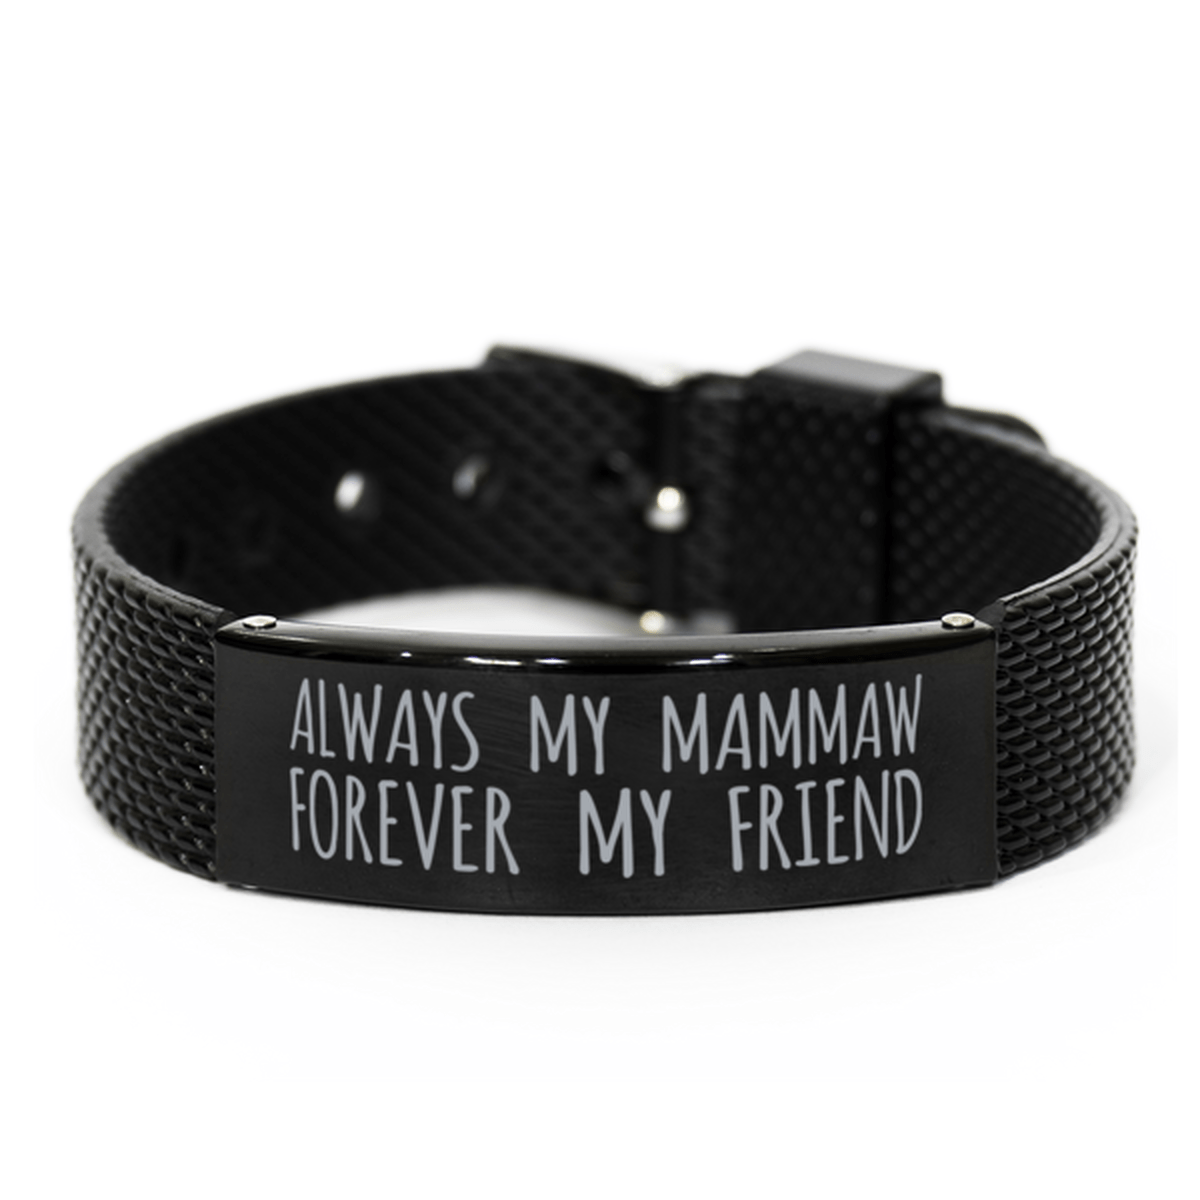 Inspirational Mammaw Black Shark Mesh Bracelet, Always My Mammaw Forever My Friend, Best Birthday Gifts for Family Friends